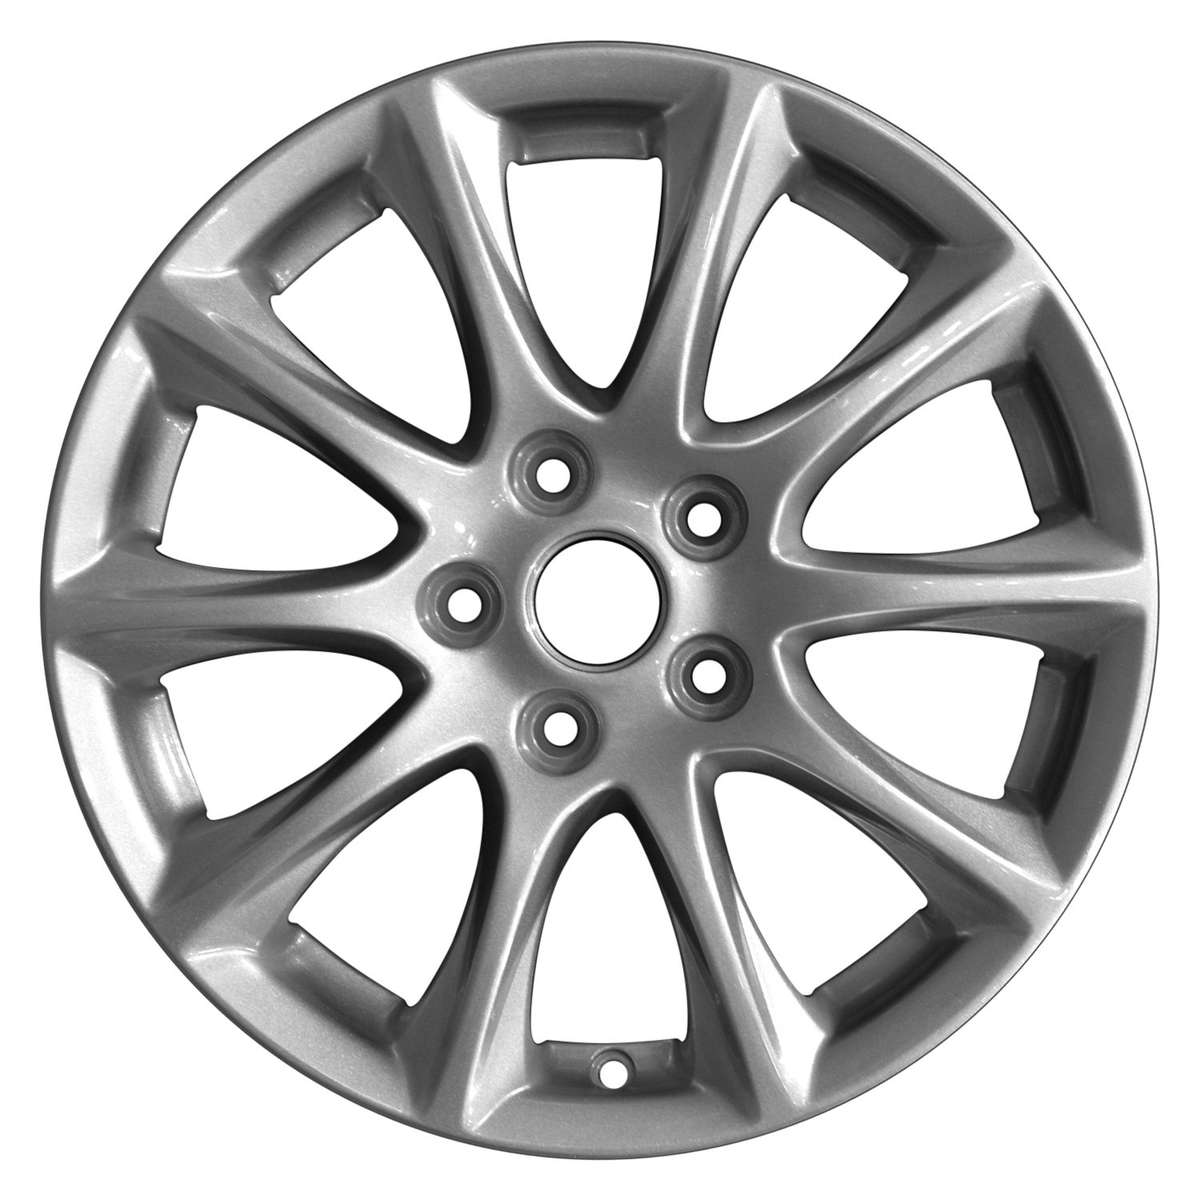 2020 Ford Fusion 16" OEM Wheel Rim W3983S